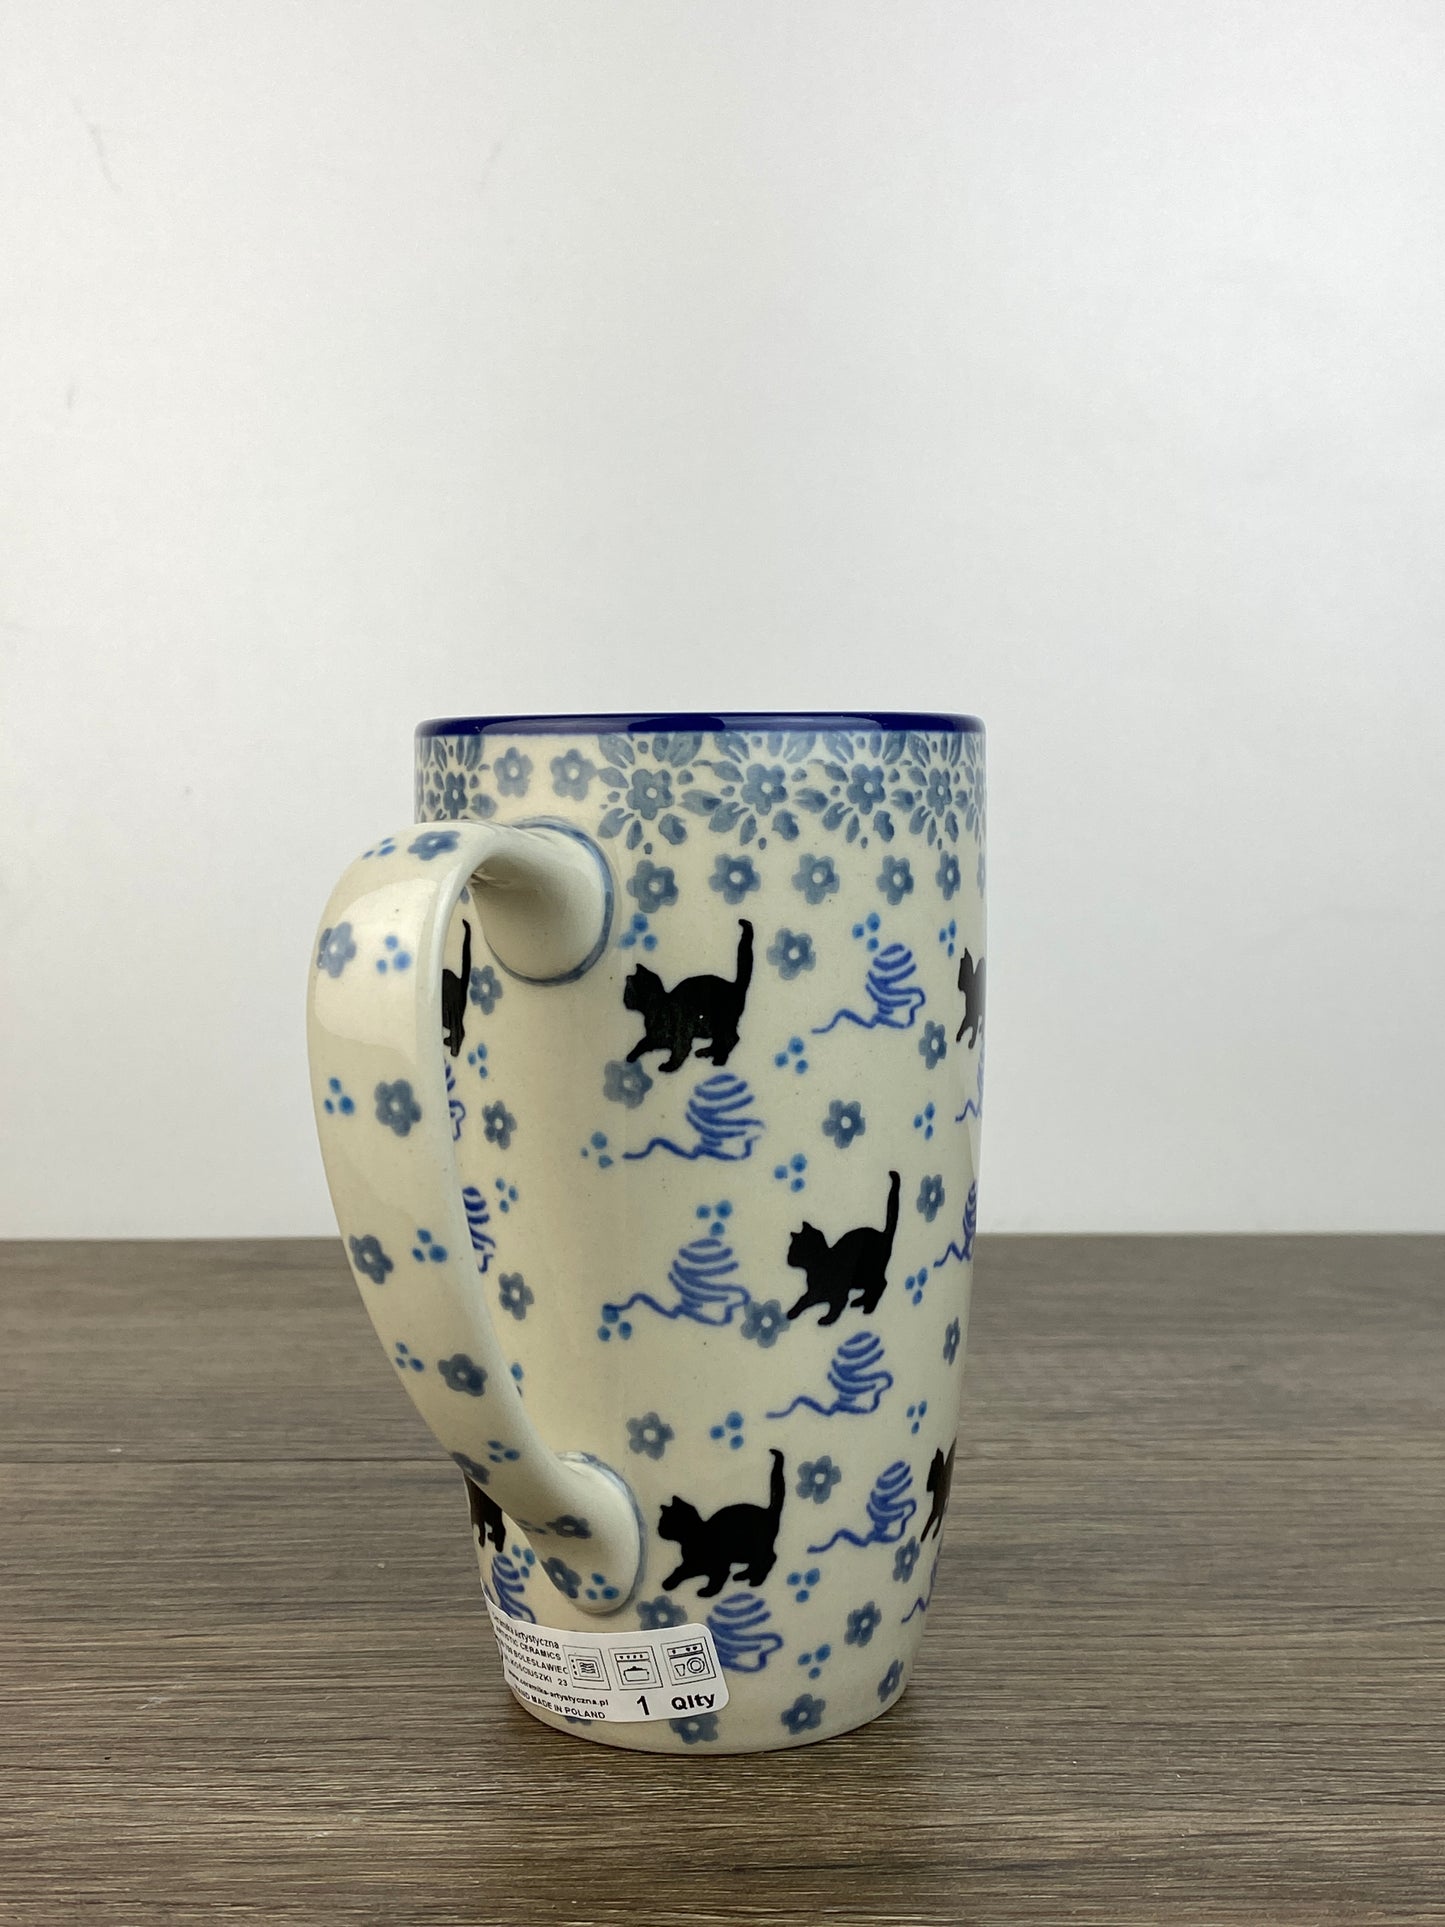 Latte Mug - Shape C52 - Pattern 2592